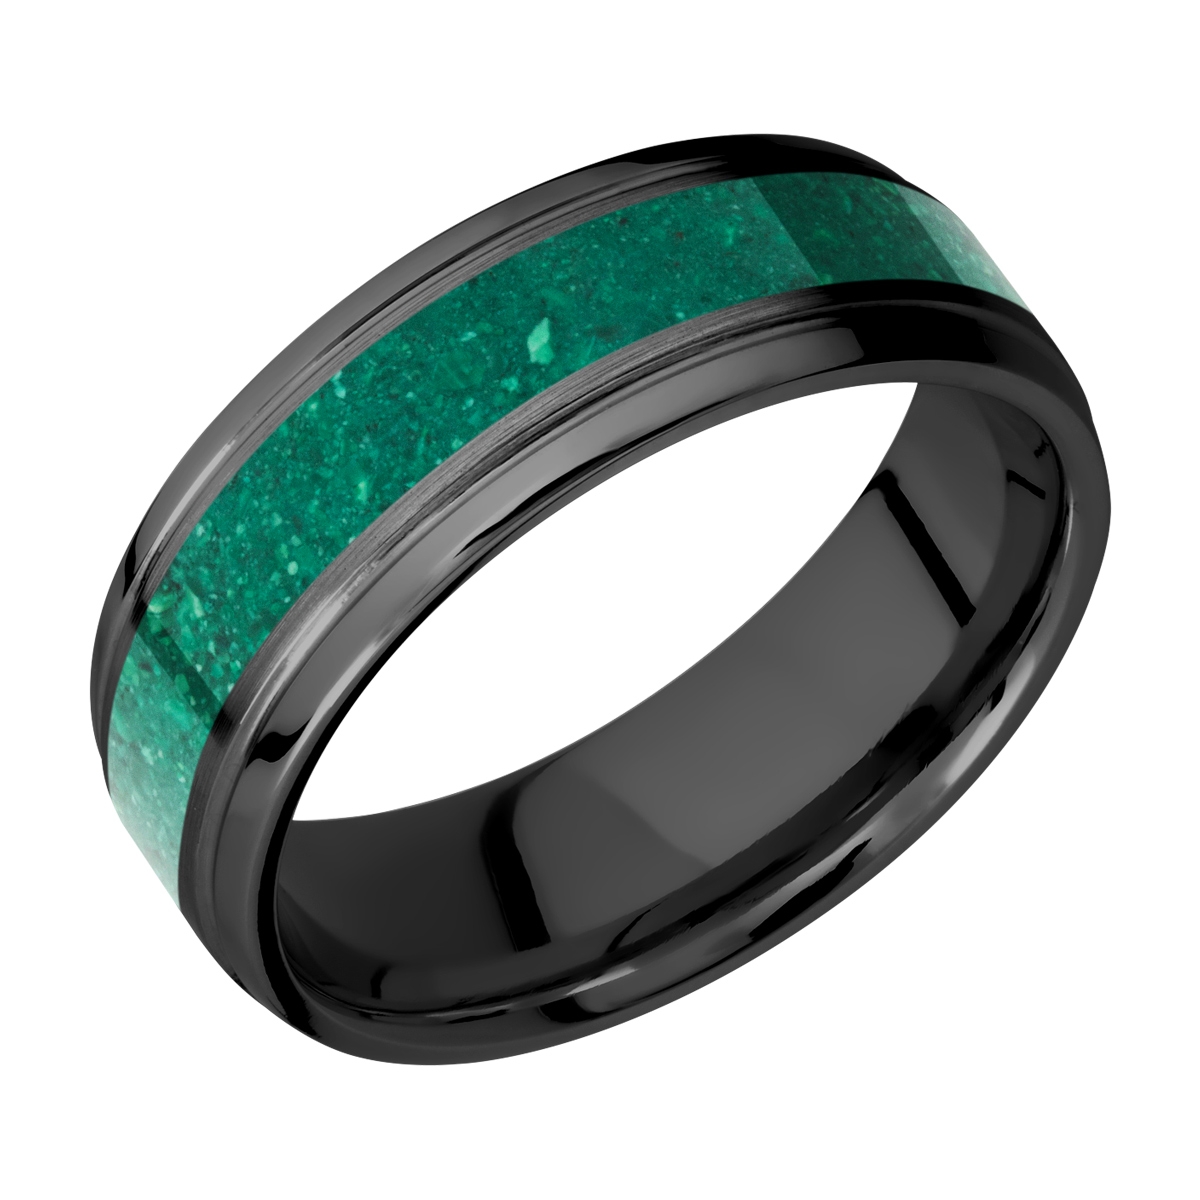 Lashbrook Z7B14(S)/MOSAIC Zirconium Wedding Ring or Band